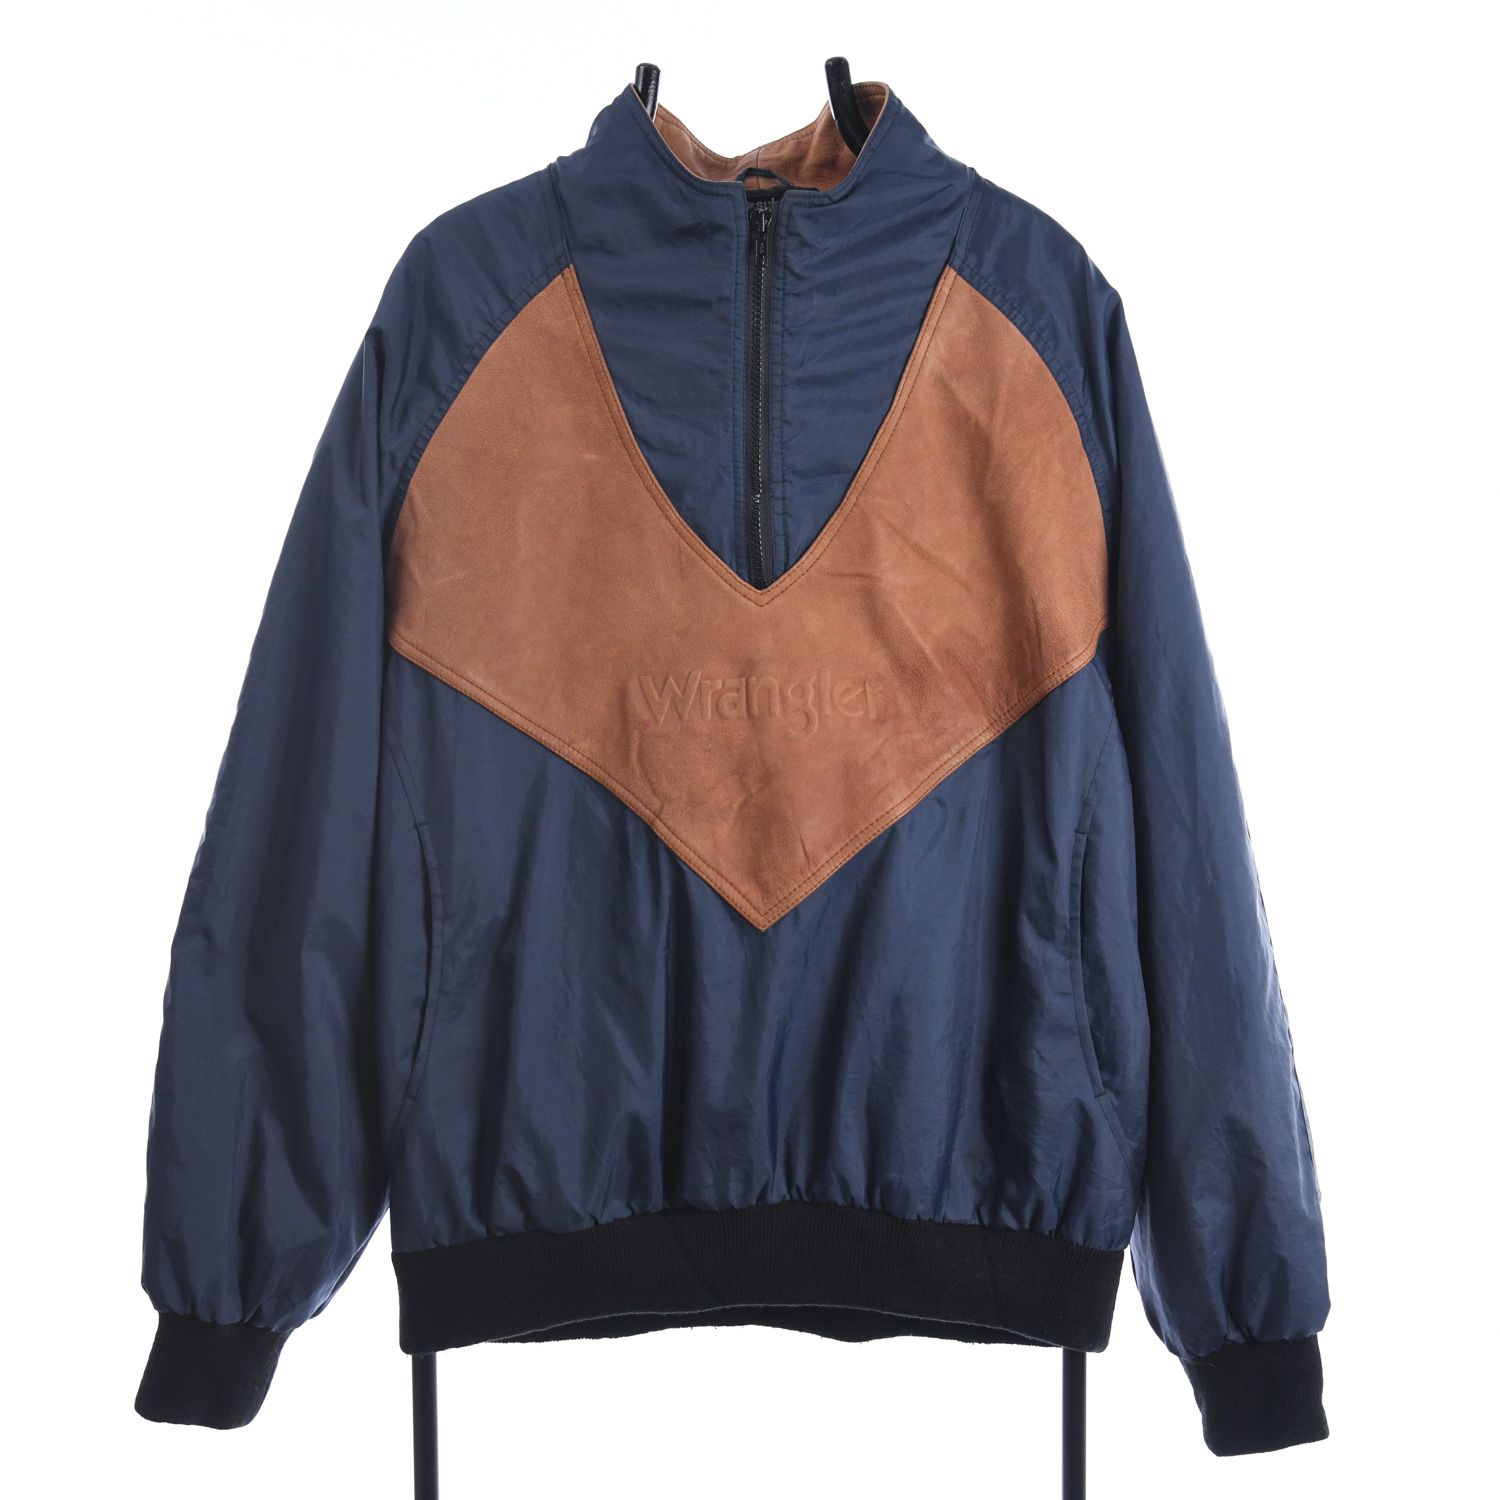 Wrangler 1980s Thinsulate Pullover Jacket